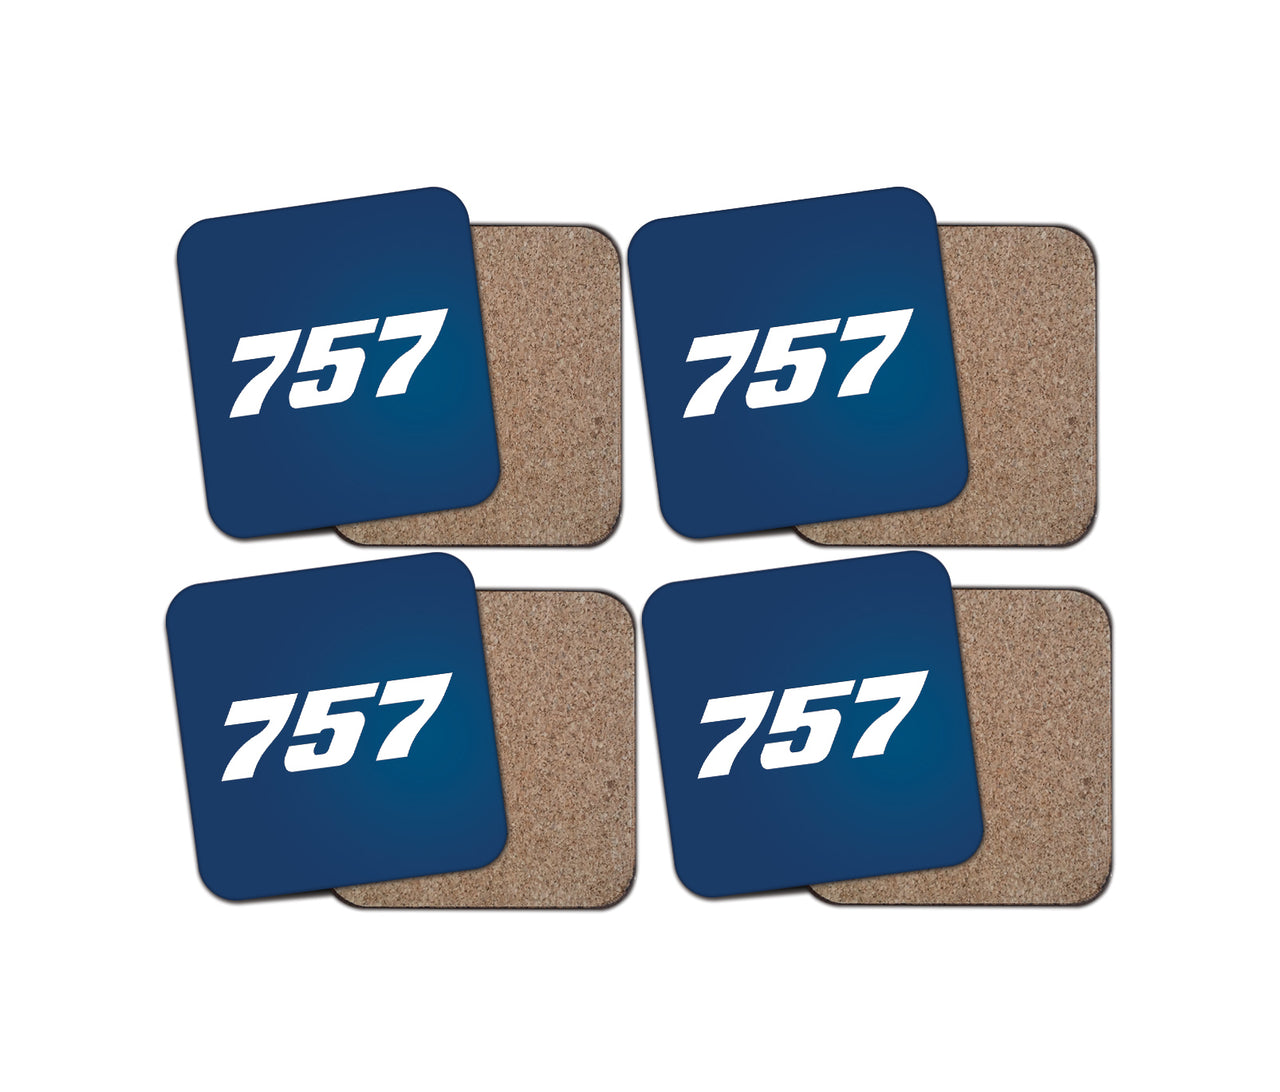 757 Flat Text Designed Coasters